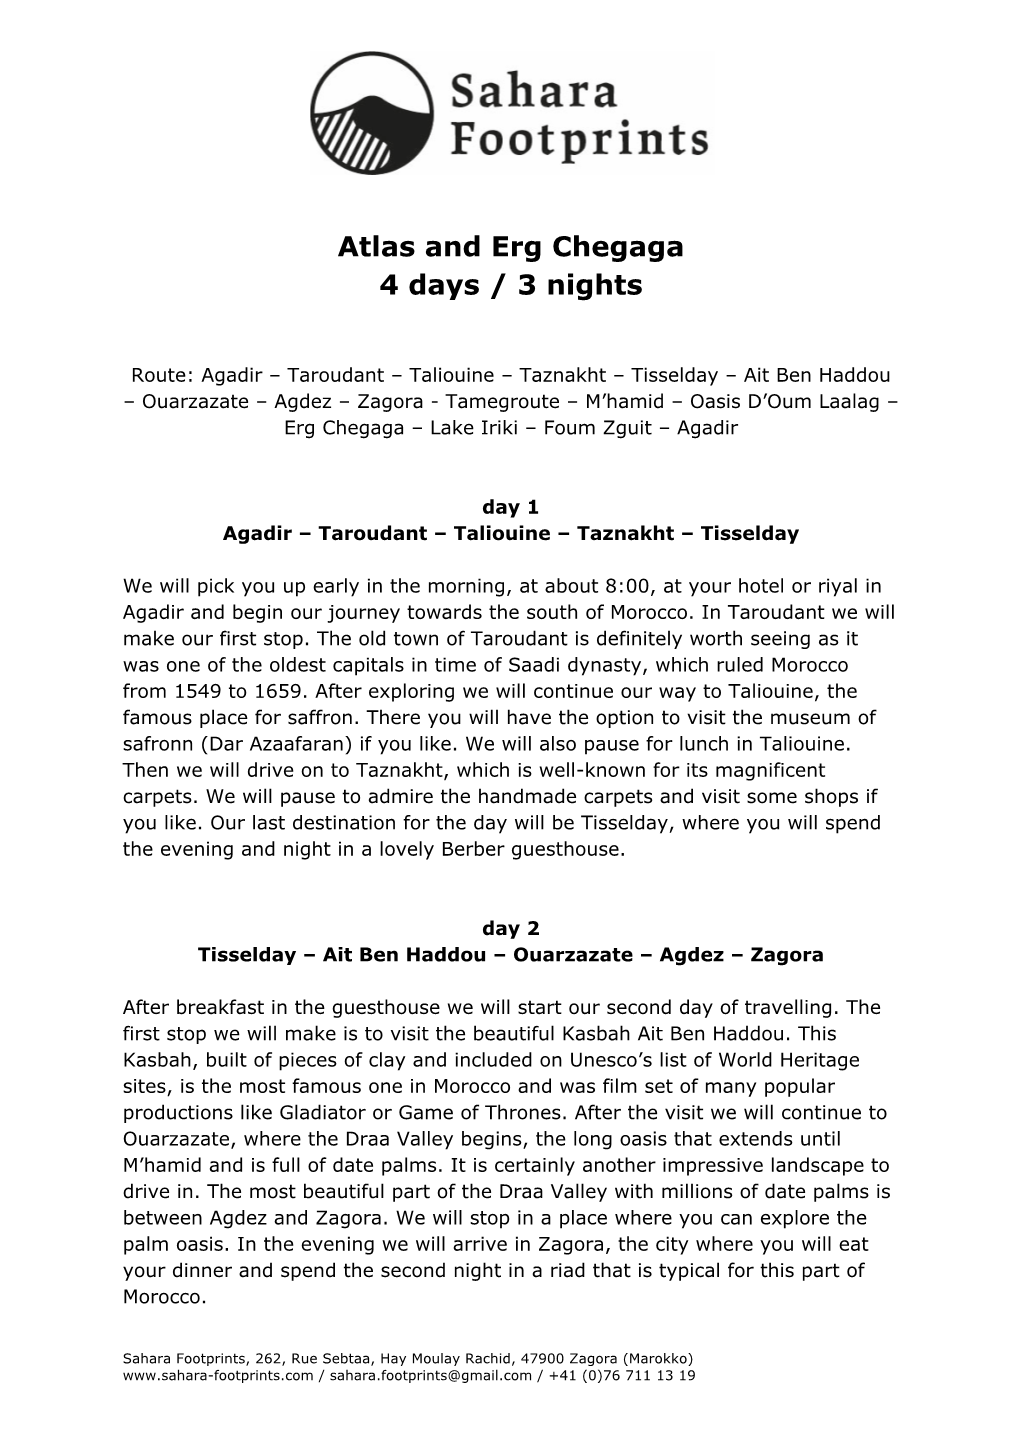 Atlas and Erg Chegaga 4 Days / 3 Nights